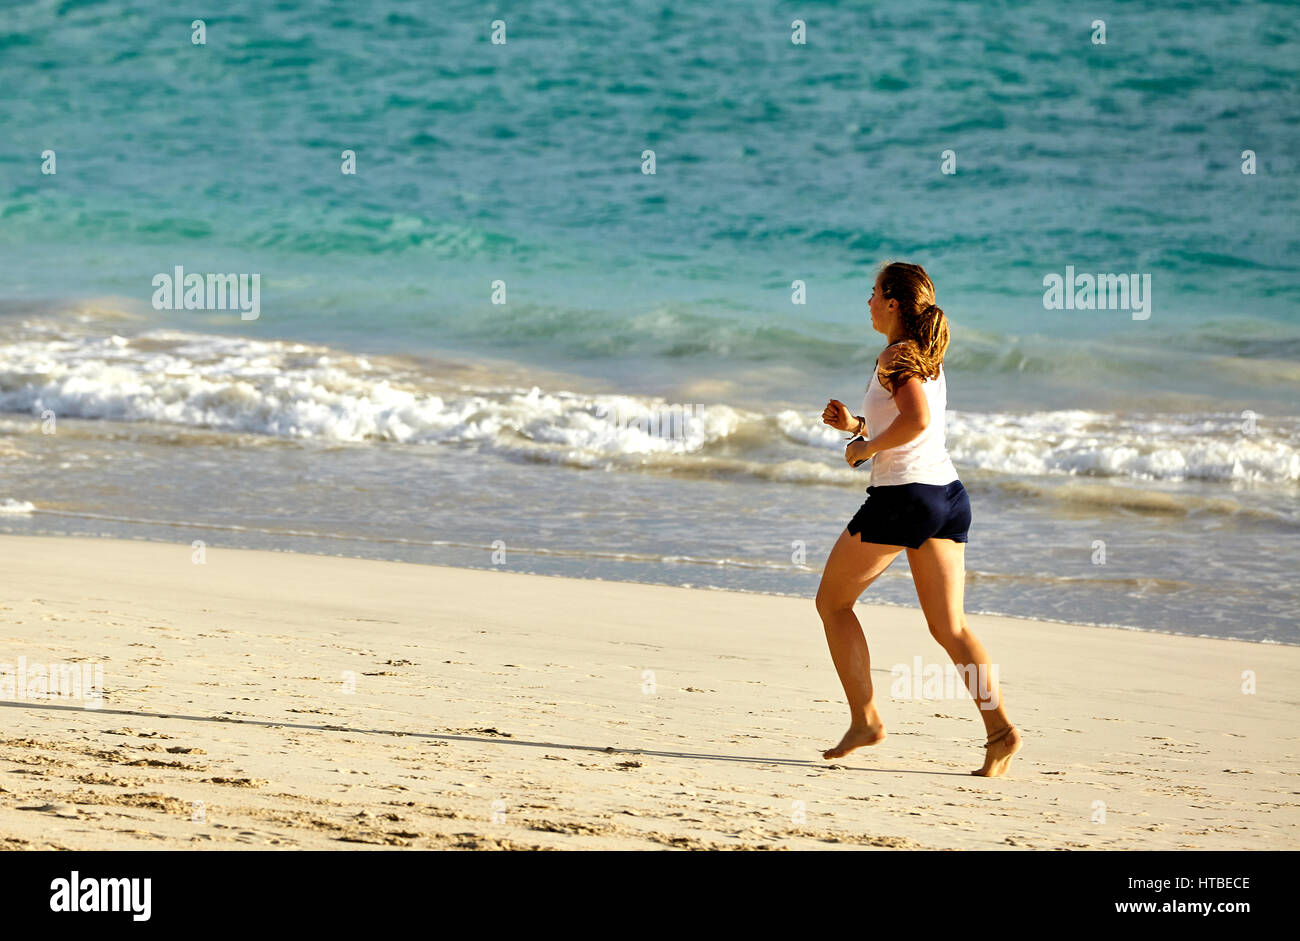 Kailua, Hawaii, USA - July 30, 2016: An unidentifed woman runs on the sandy beach along the shores of Kailua Bay in Hawaii Stock Photo